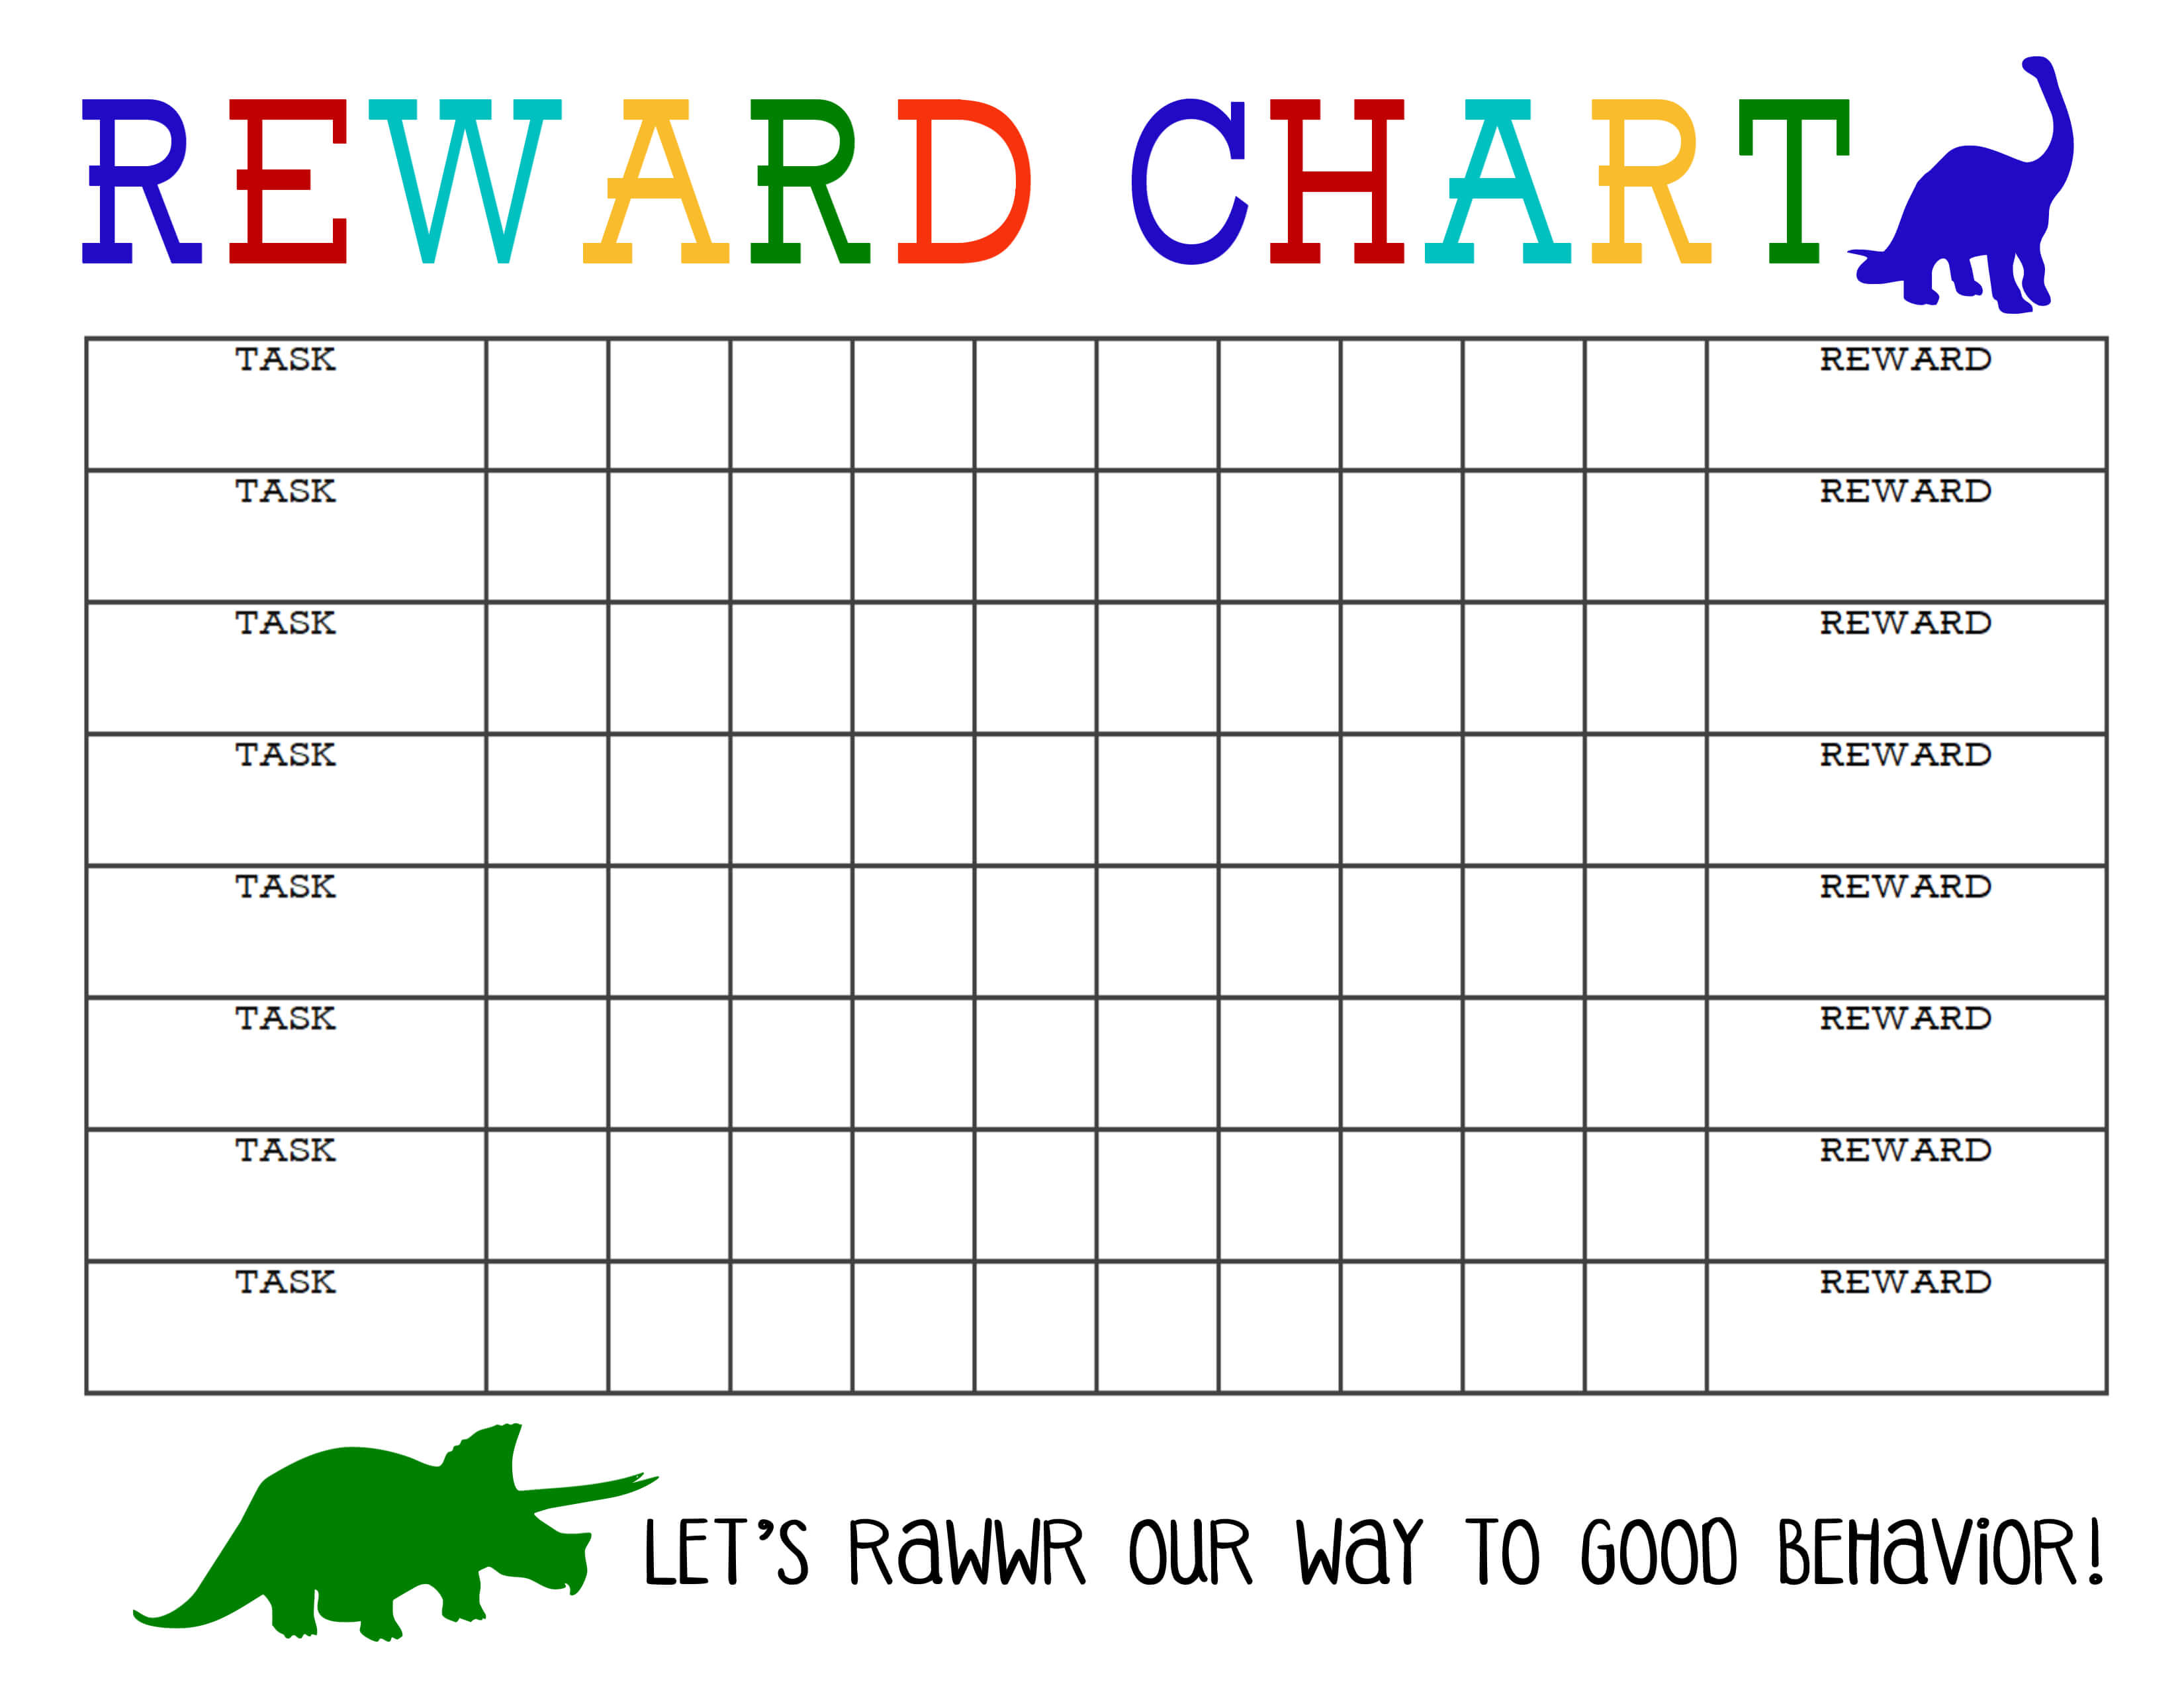 Printable Reward Chart – The Girl Creative Inside Blank Reward Chart Template